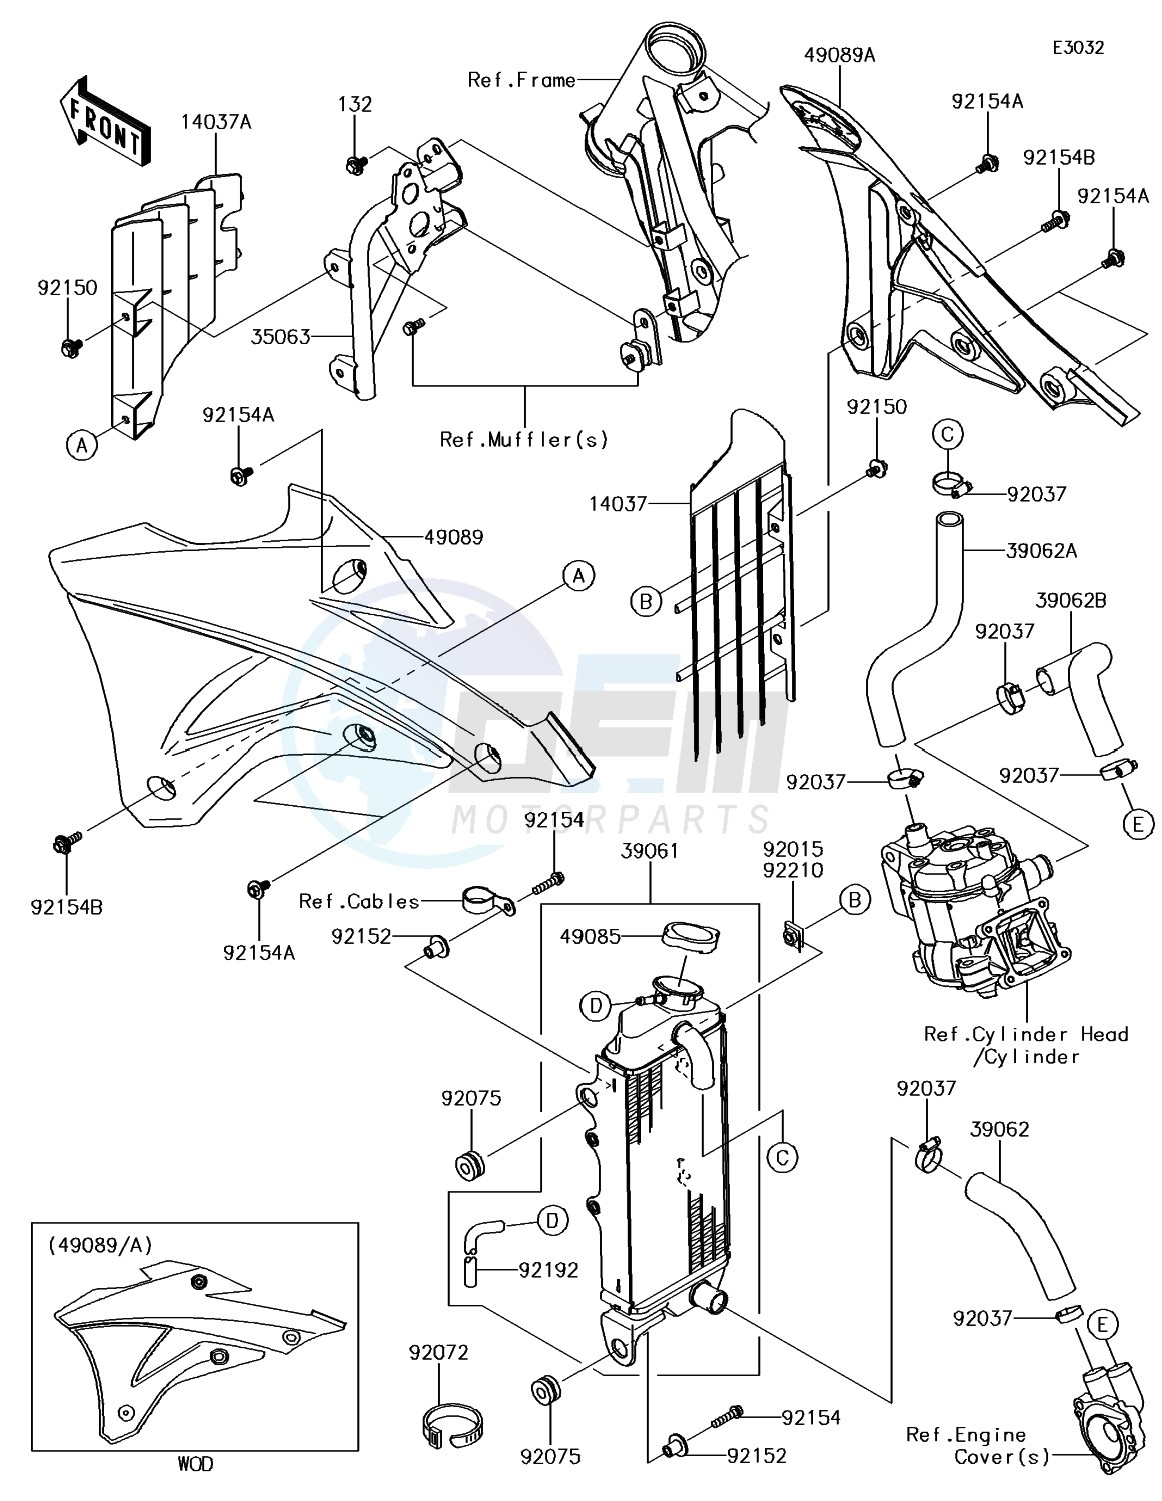 Radiator blueprint